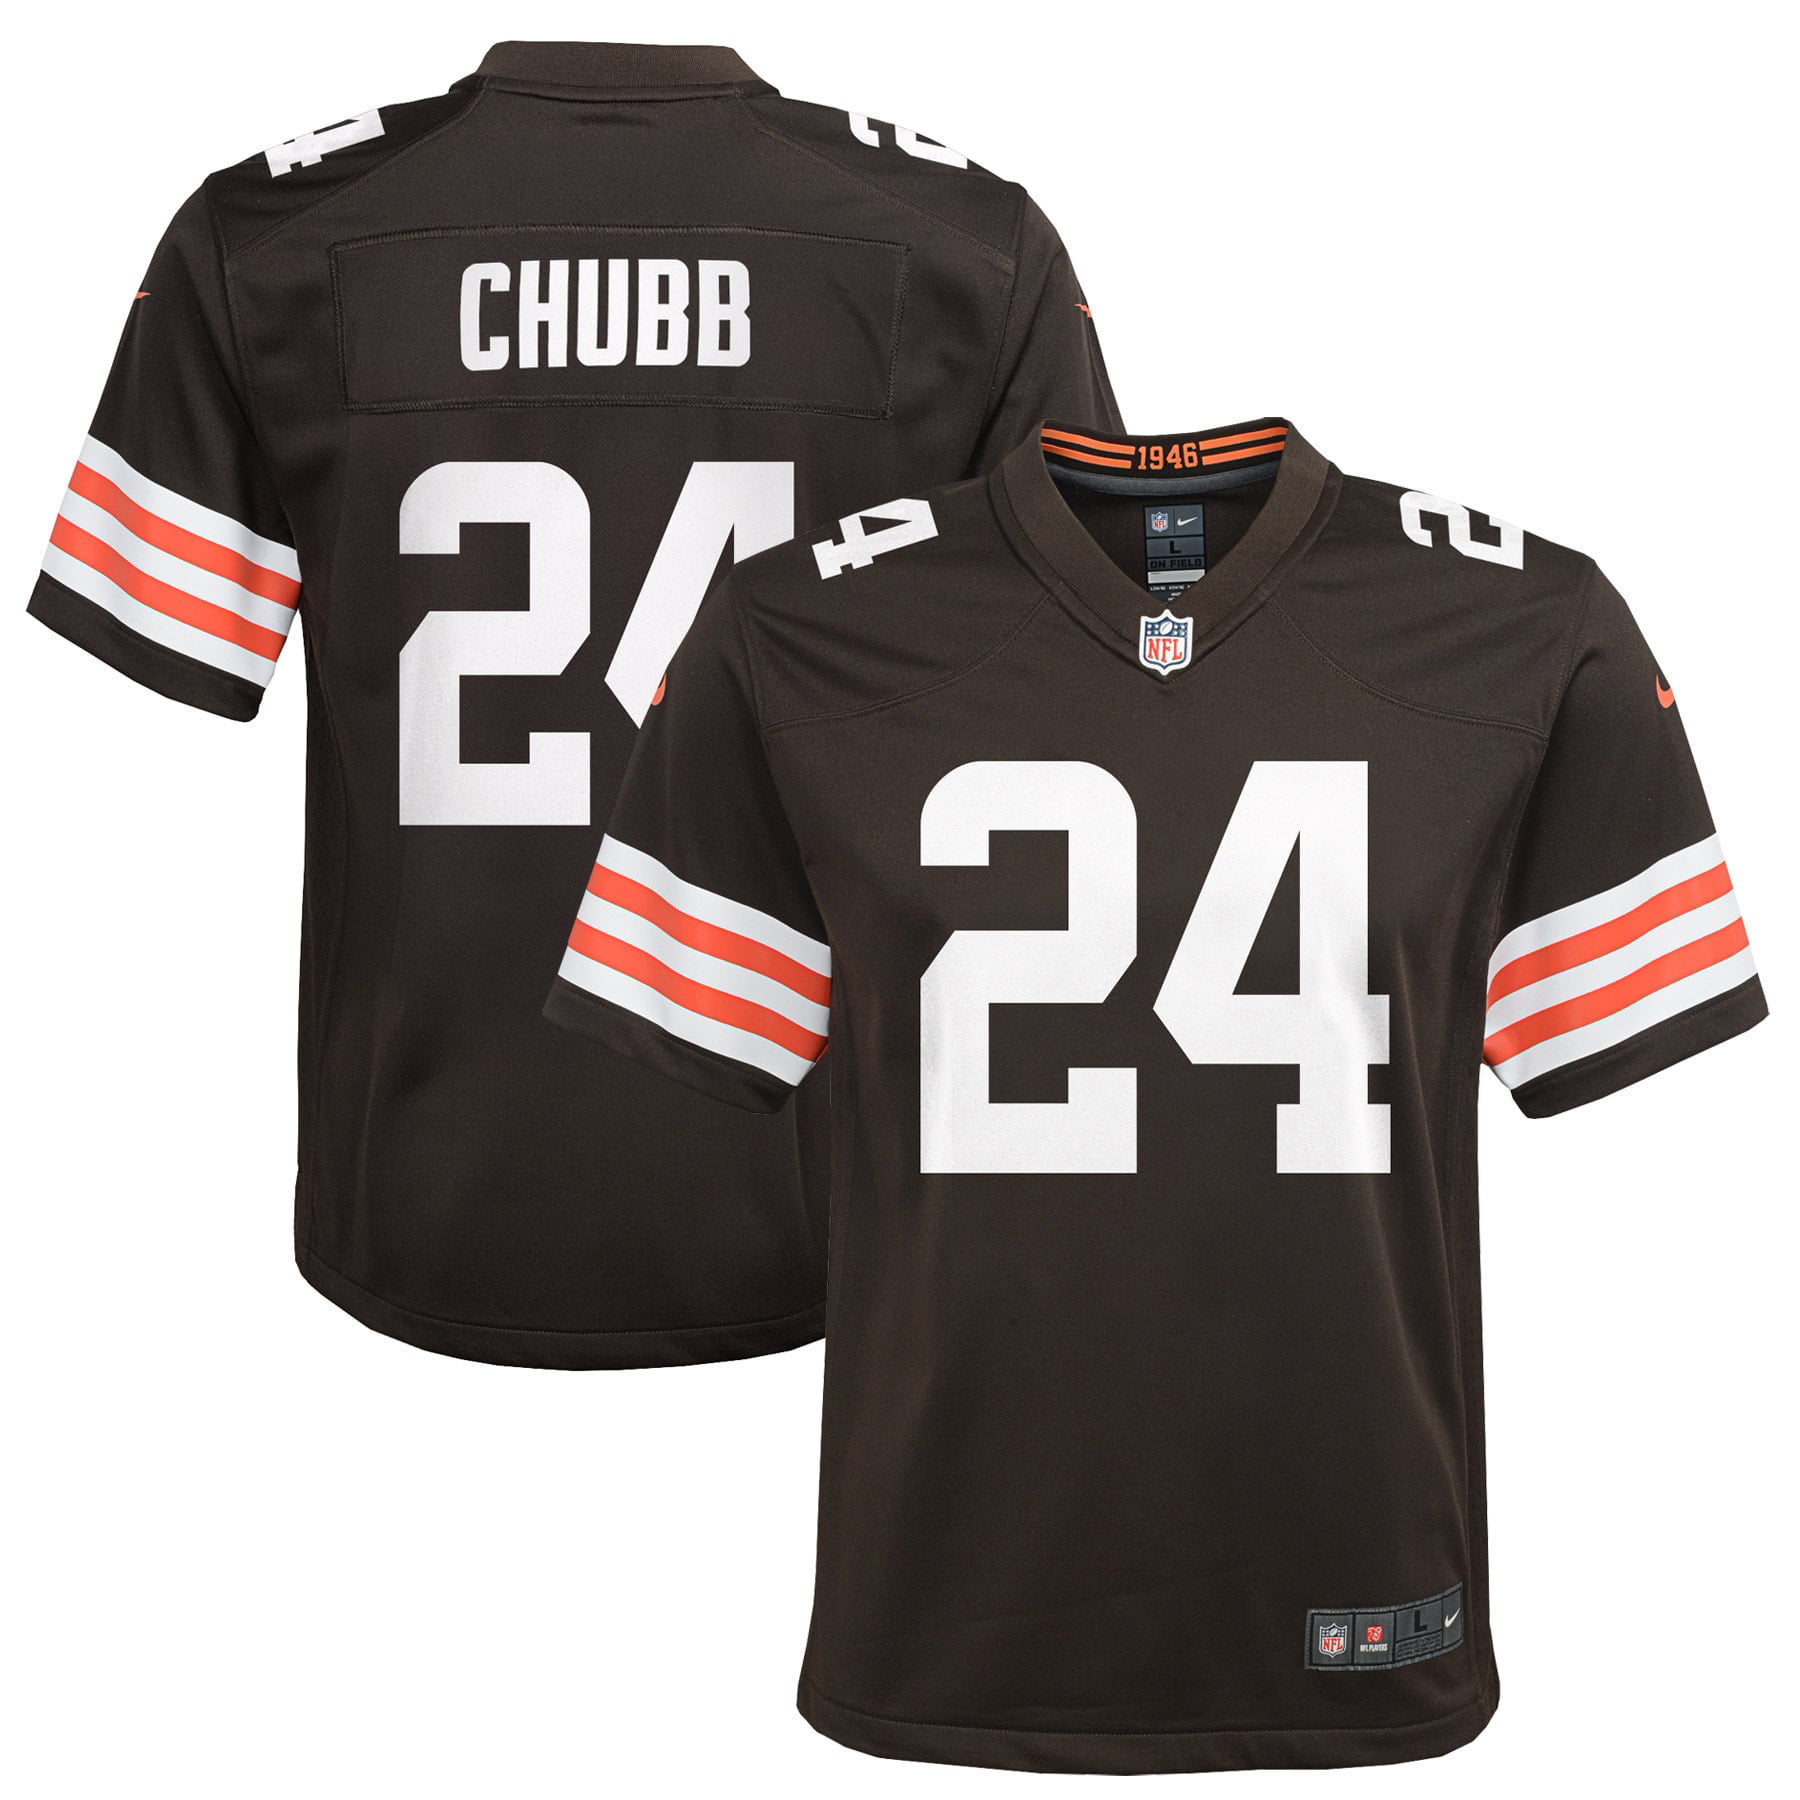 Nick Chubb Cleveland Browns Nike Youth Game Jersey - Brown - Walmart.com - Walmart.com